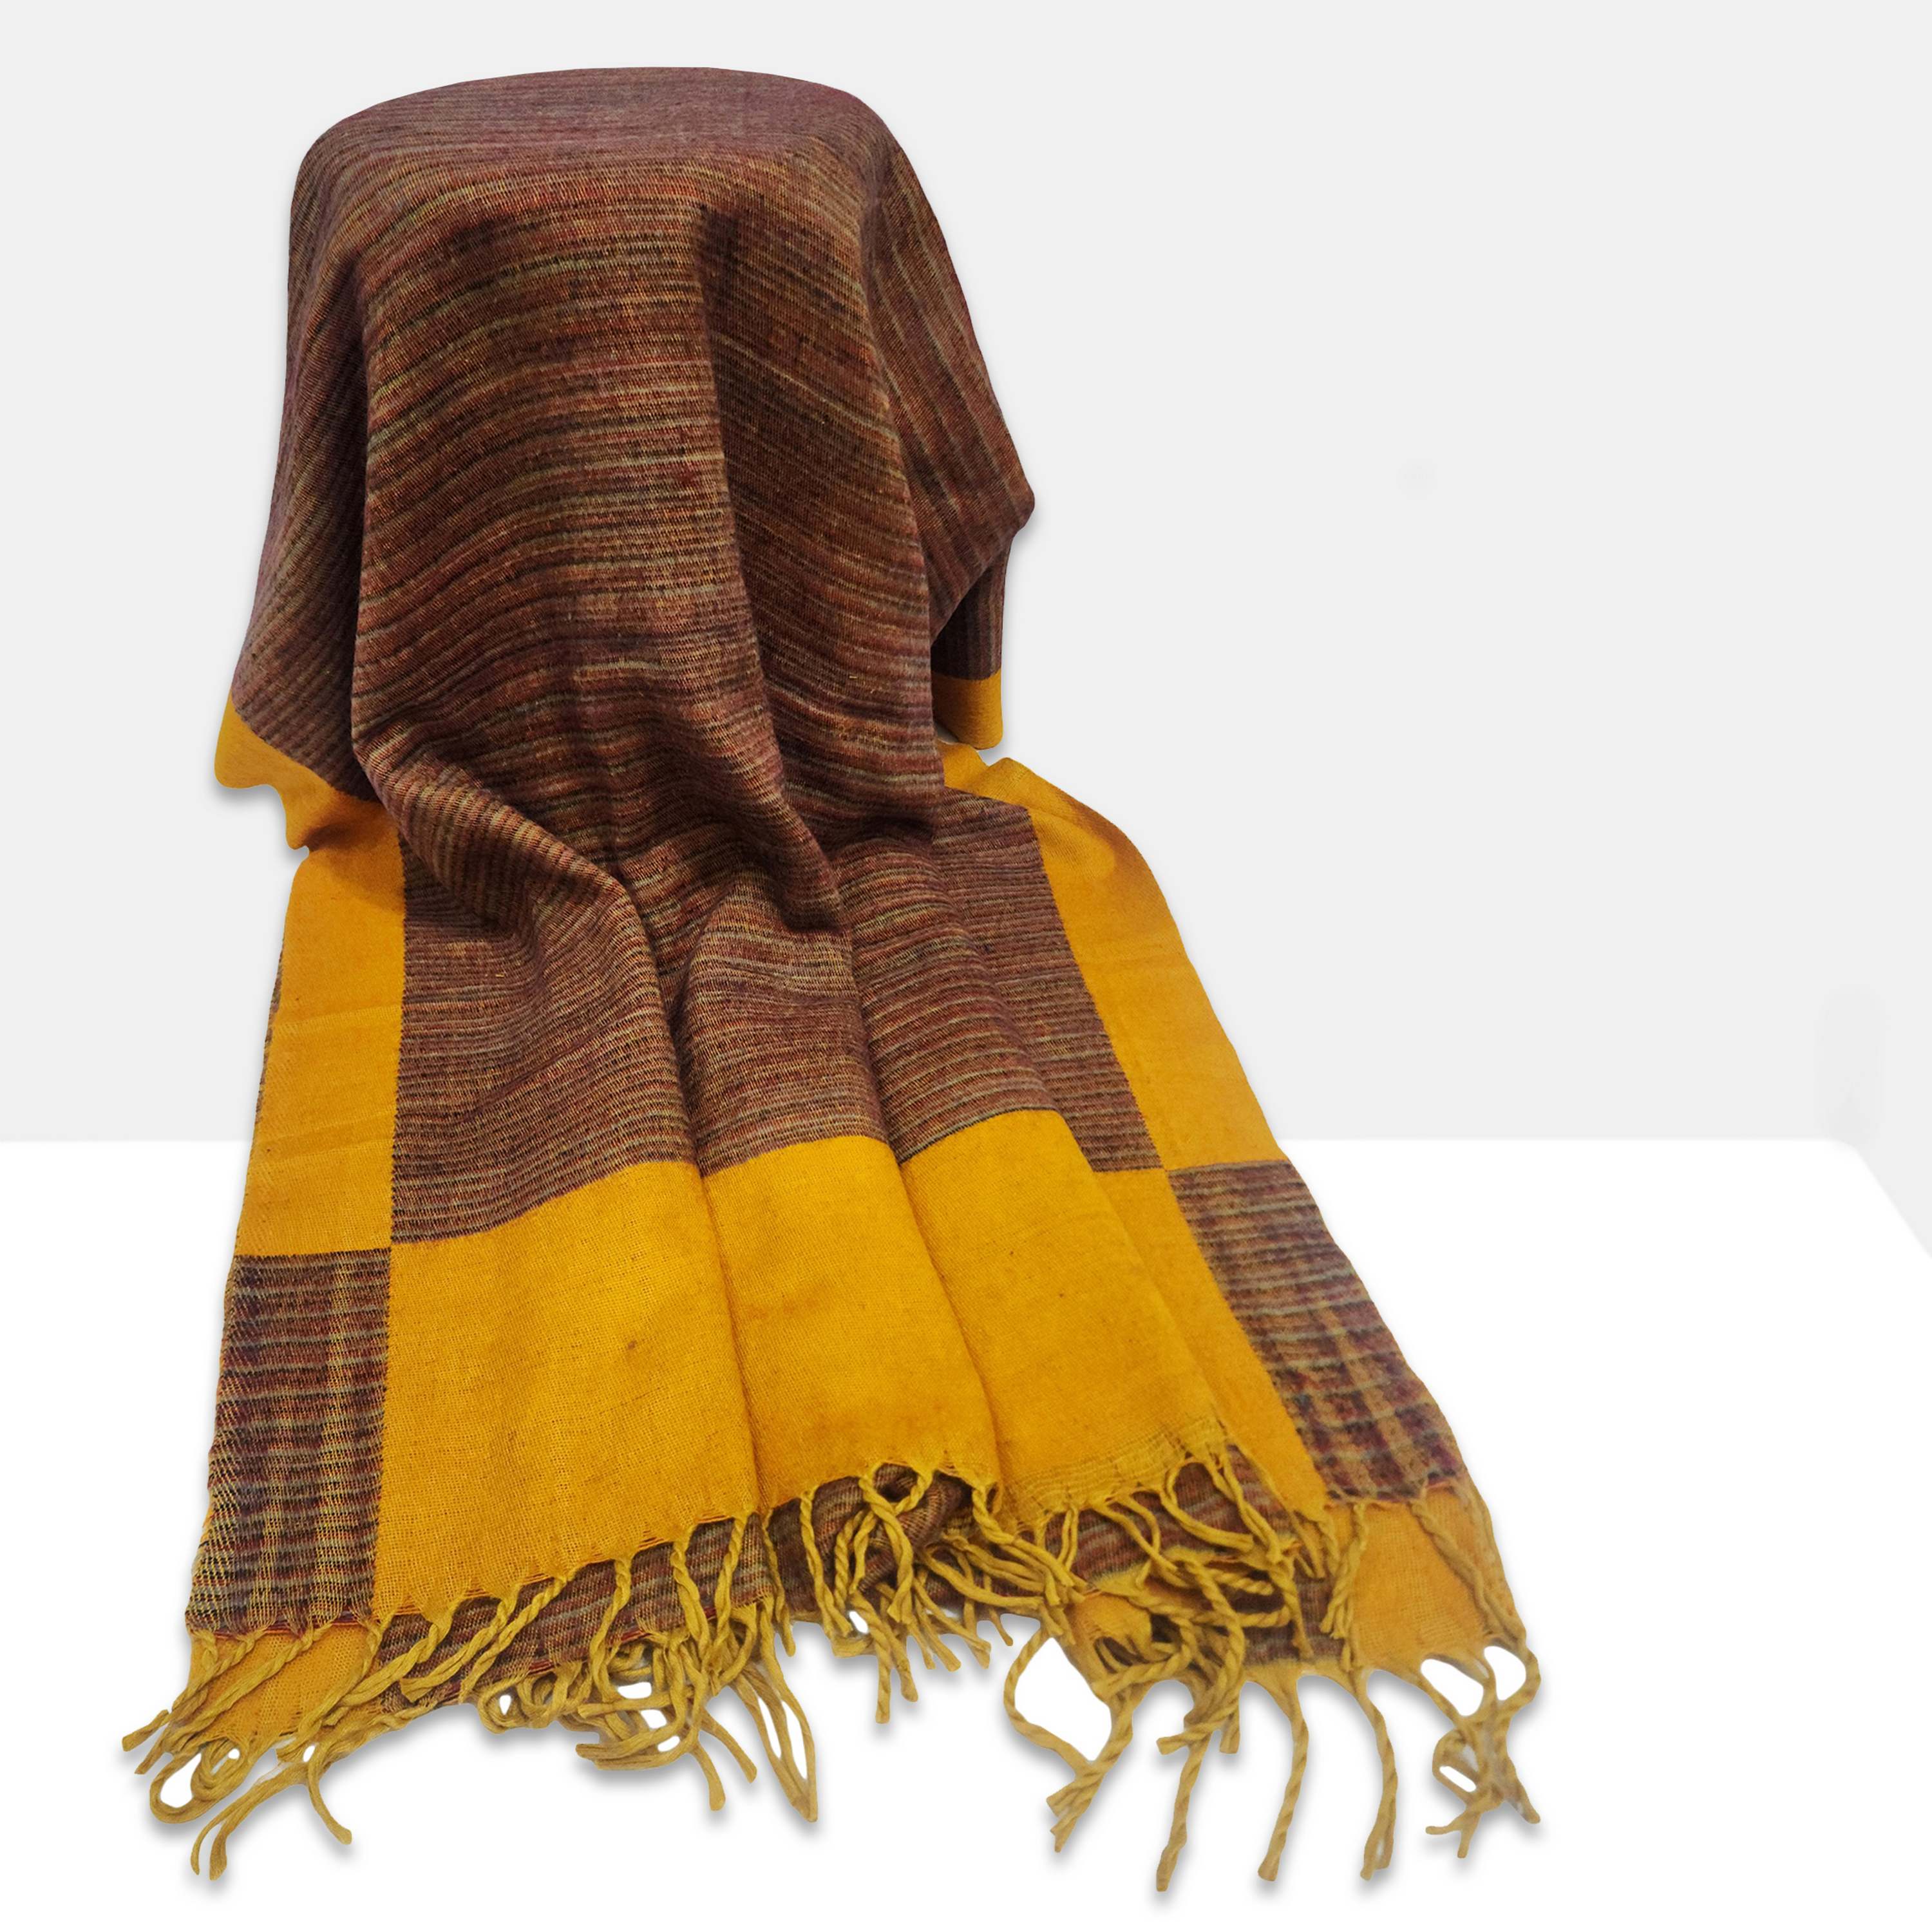 Tibet Blanket, Acrylic Woolen Blanket, With Multi Color Strip